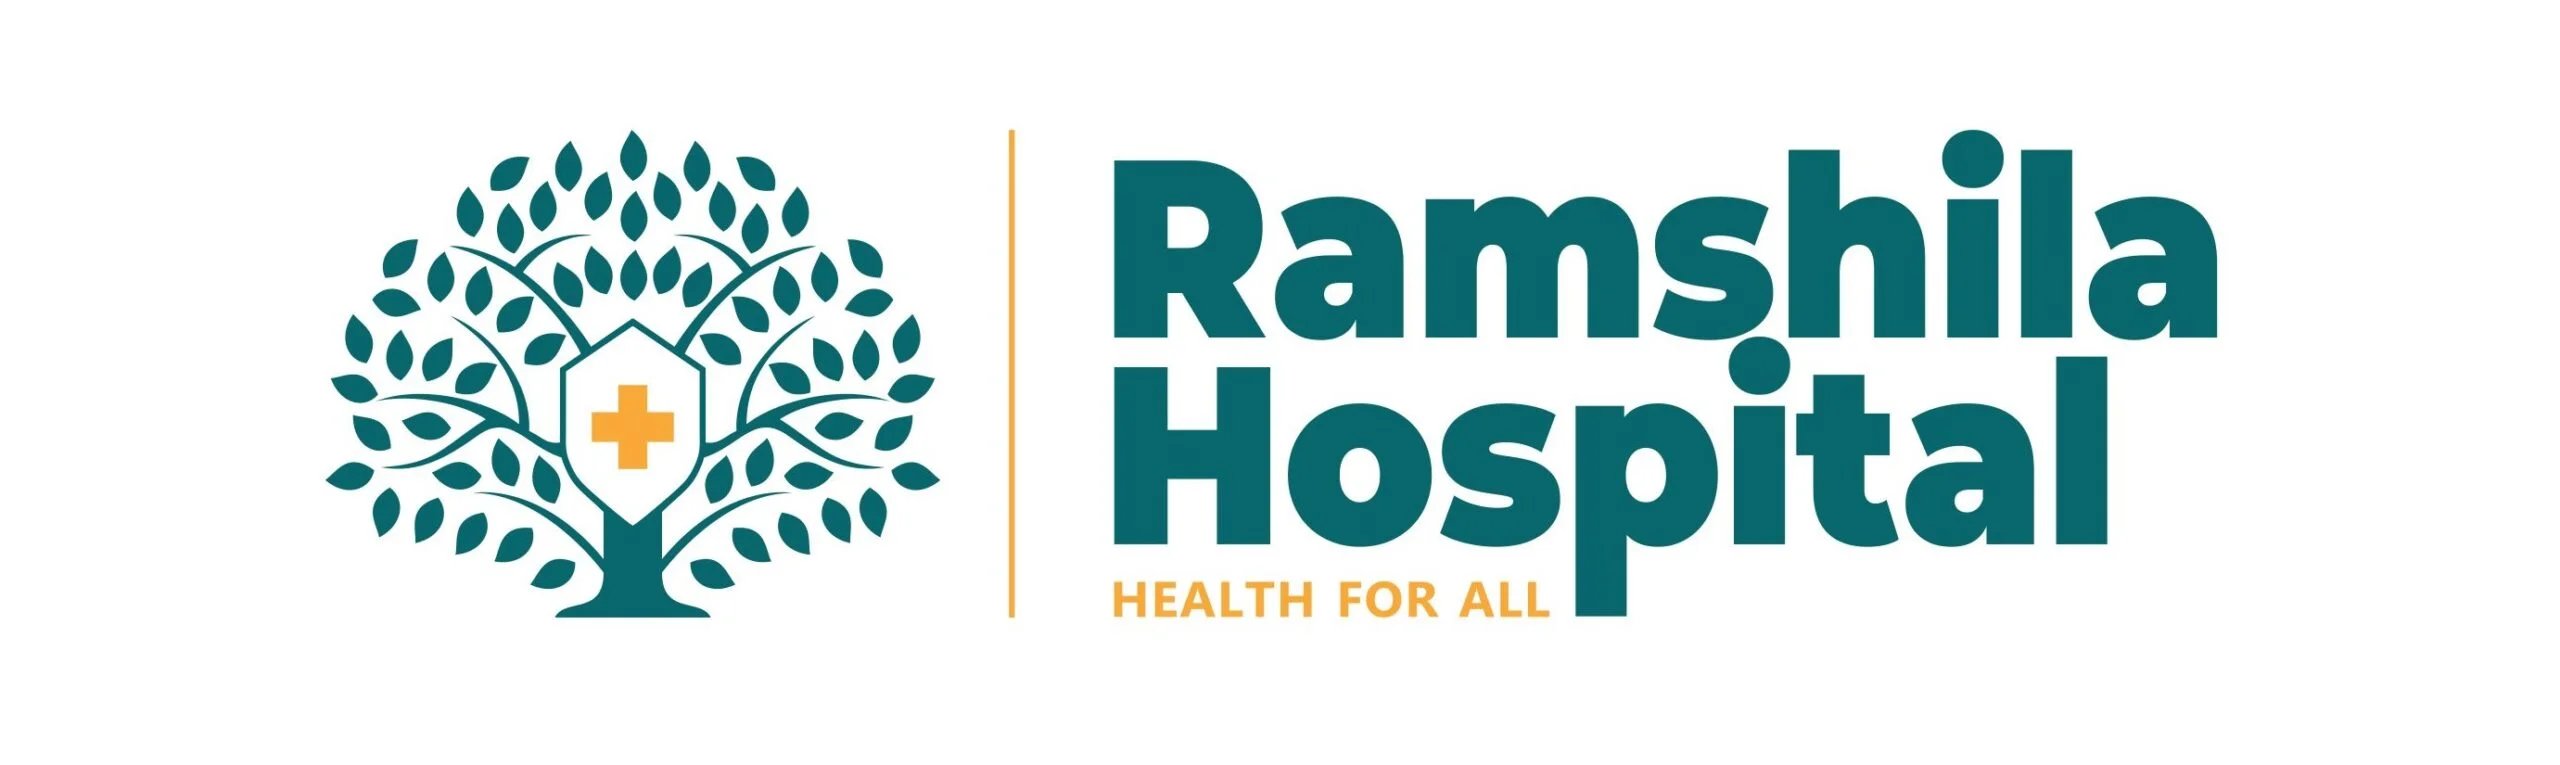 Ramshila-Hospital-_-Logo-_-Square-scaled.jpg